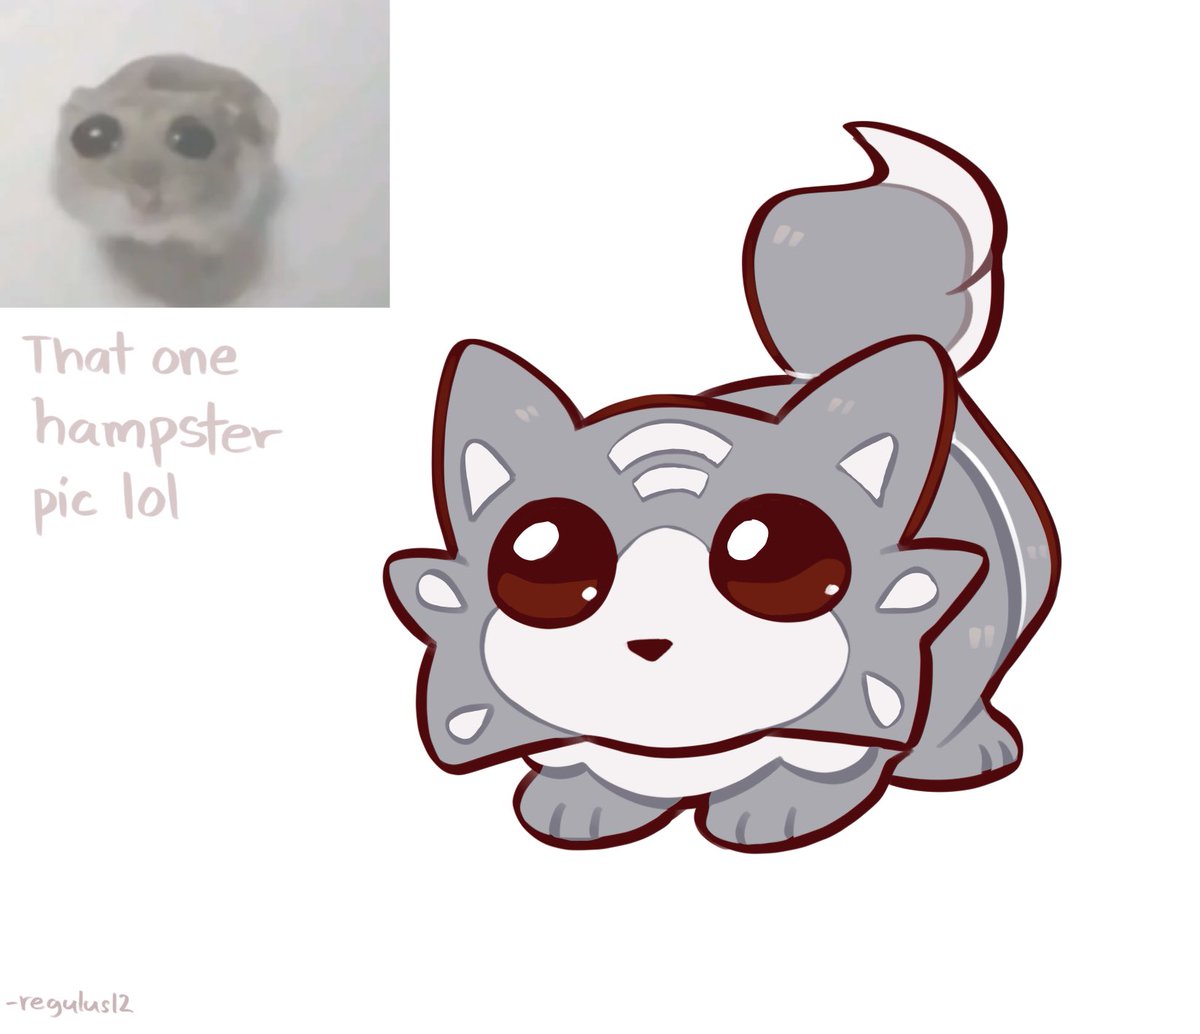 [shitpost] that one hamster image but kittone ahhahahahdhnamcksks #loomianlegacy #loomianlegacyart